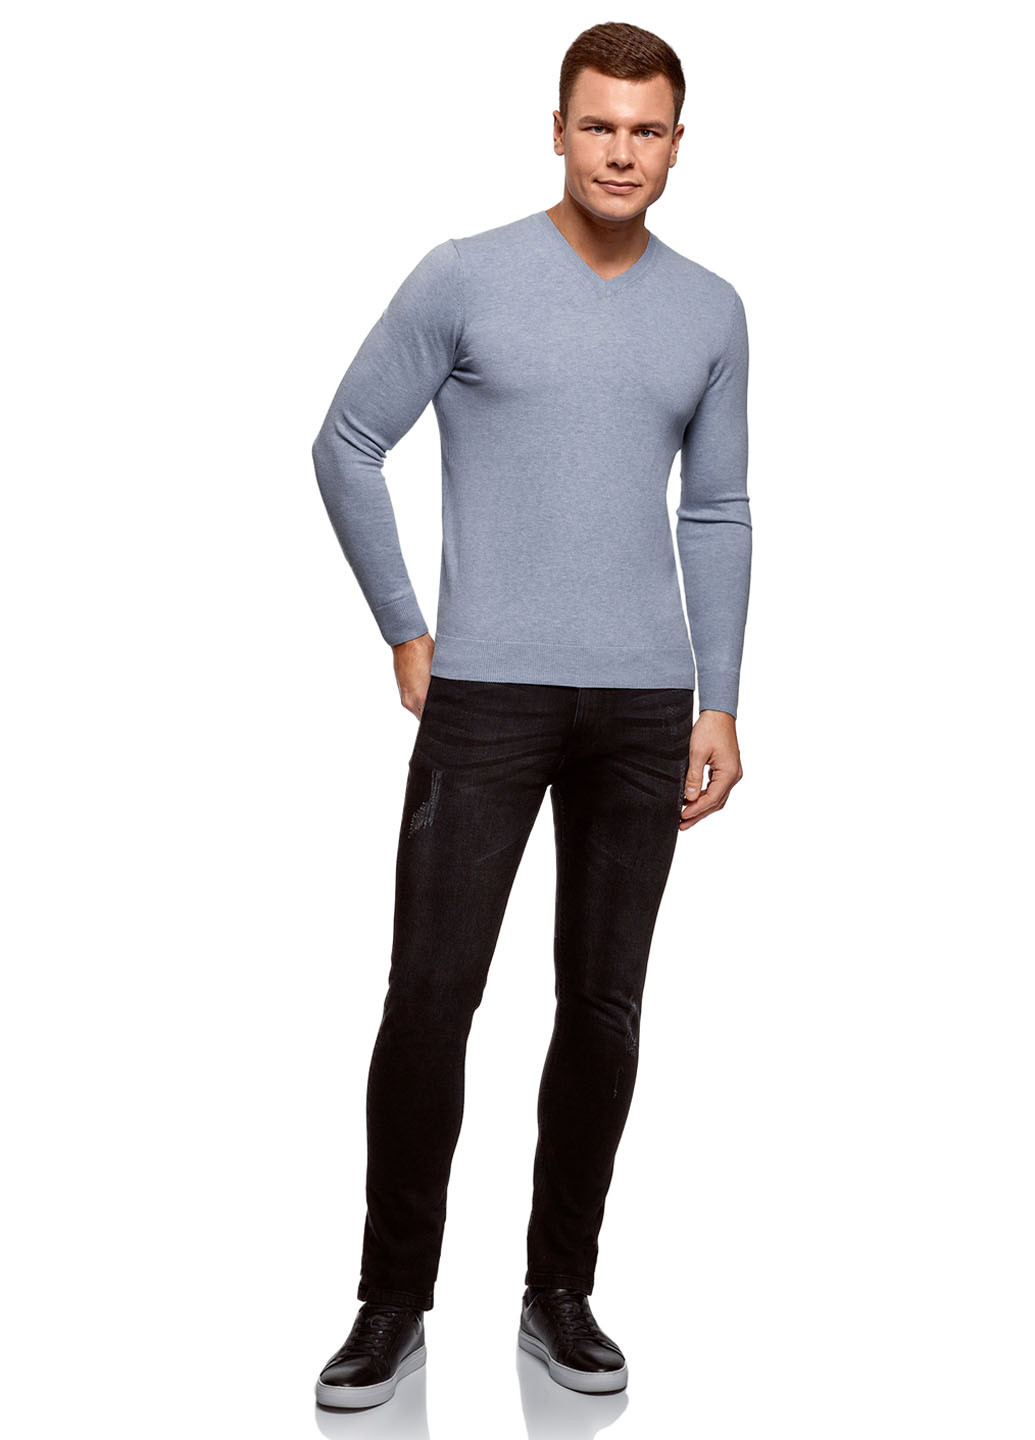 Серо-синий демисезонный пуловер пуловер Oodji